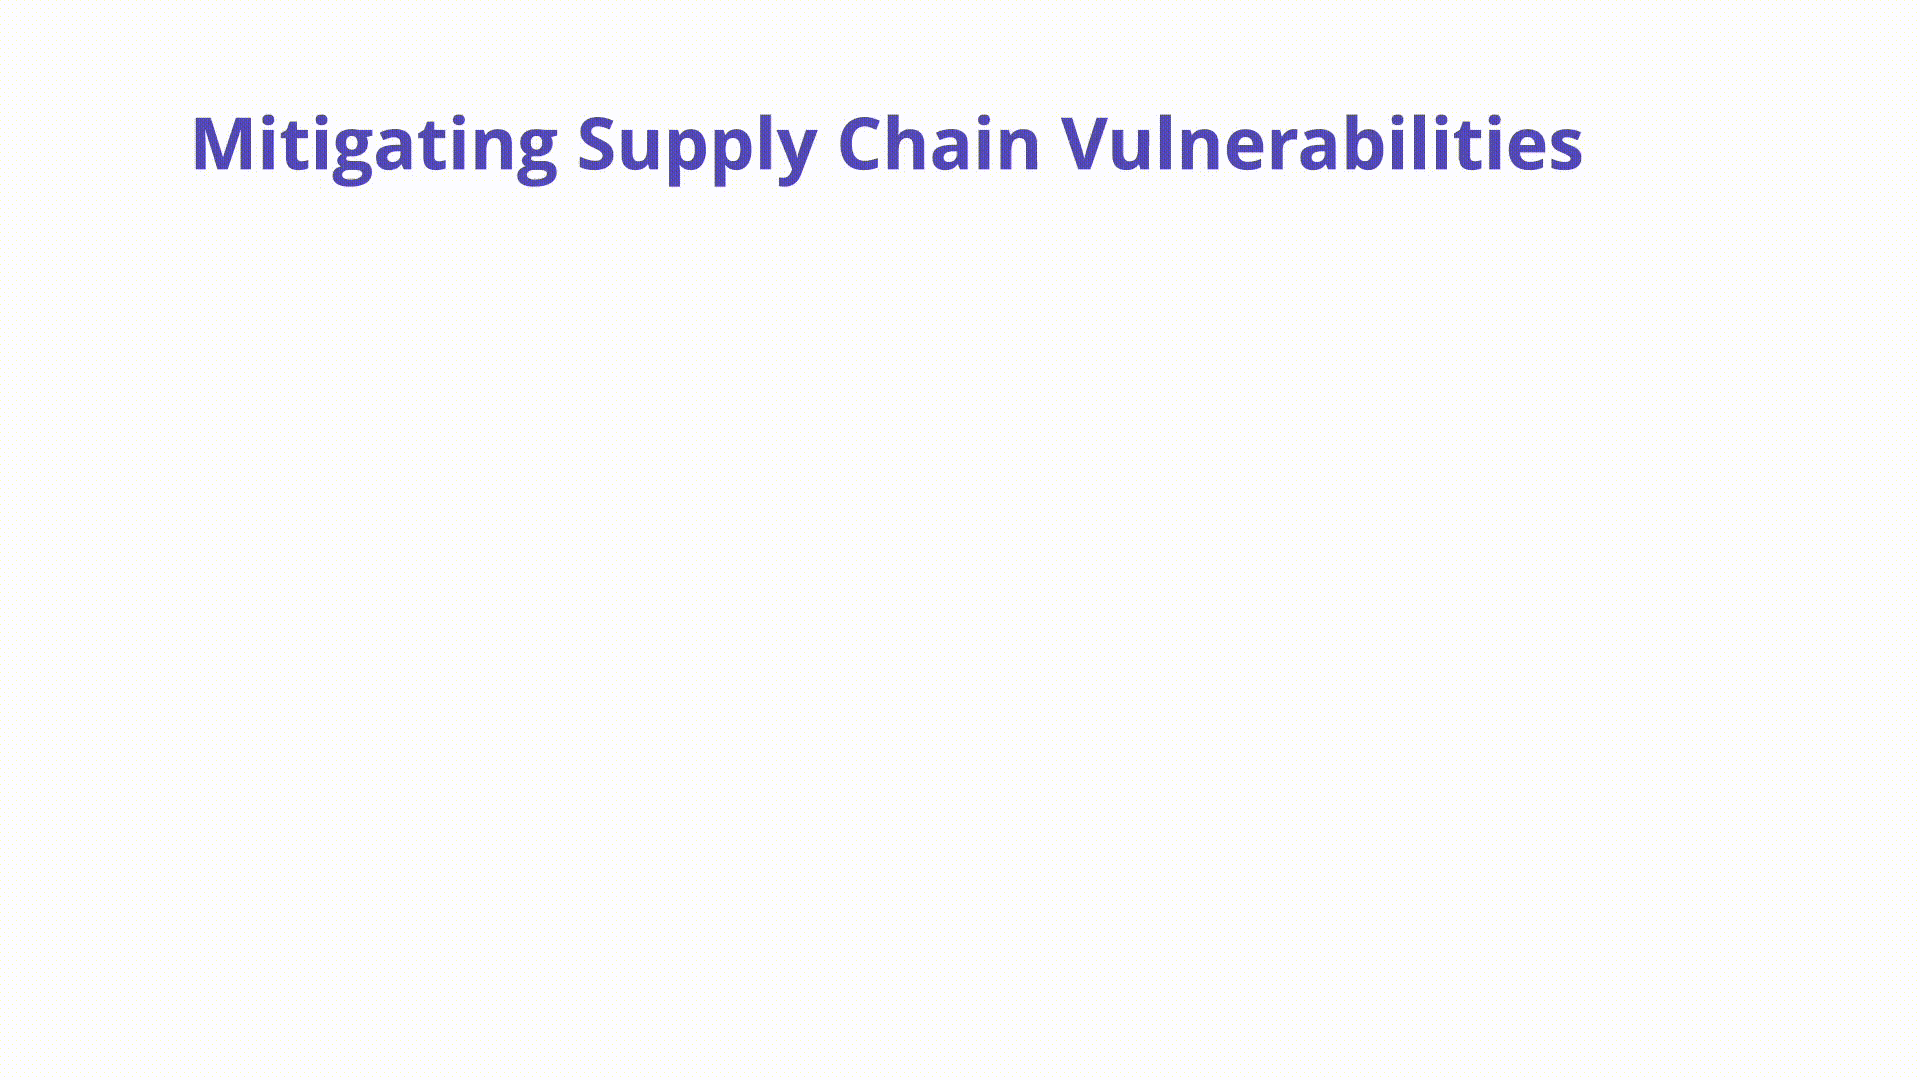 Supply Chain Vulnerabilities -
Mitigations